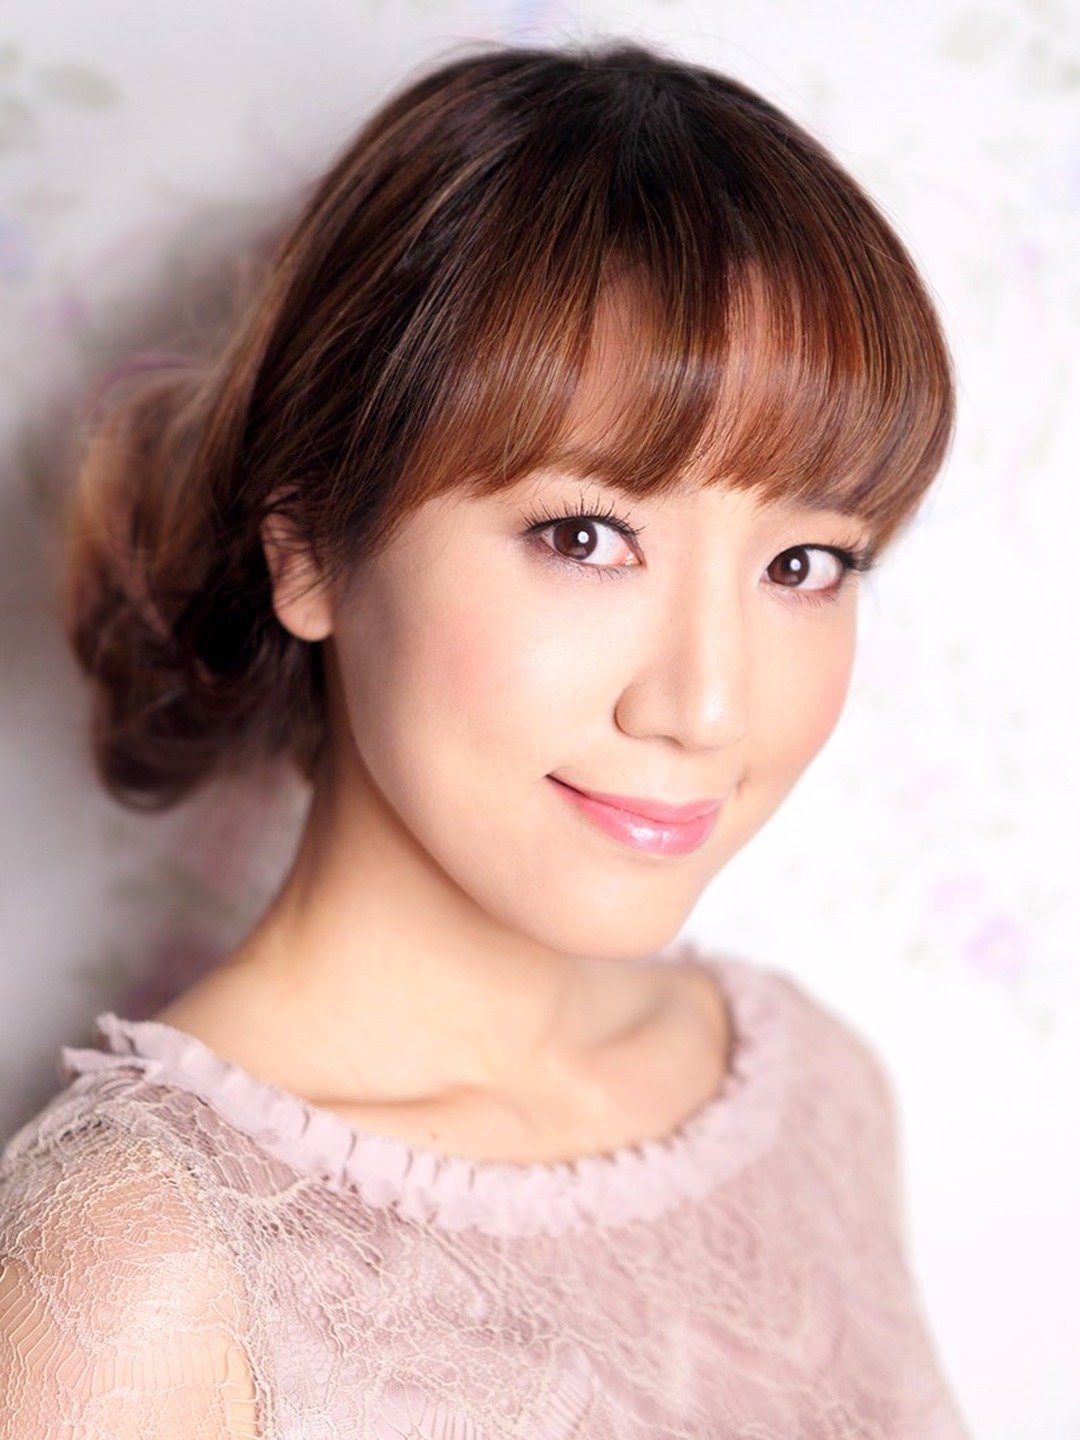 Haruna Ikezawa Greek, Japanese Actress, Voice Actress, Singer